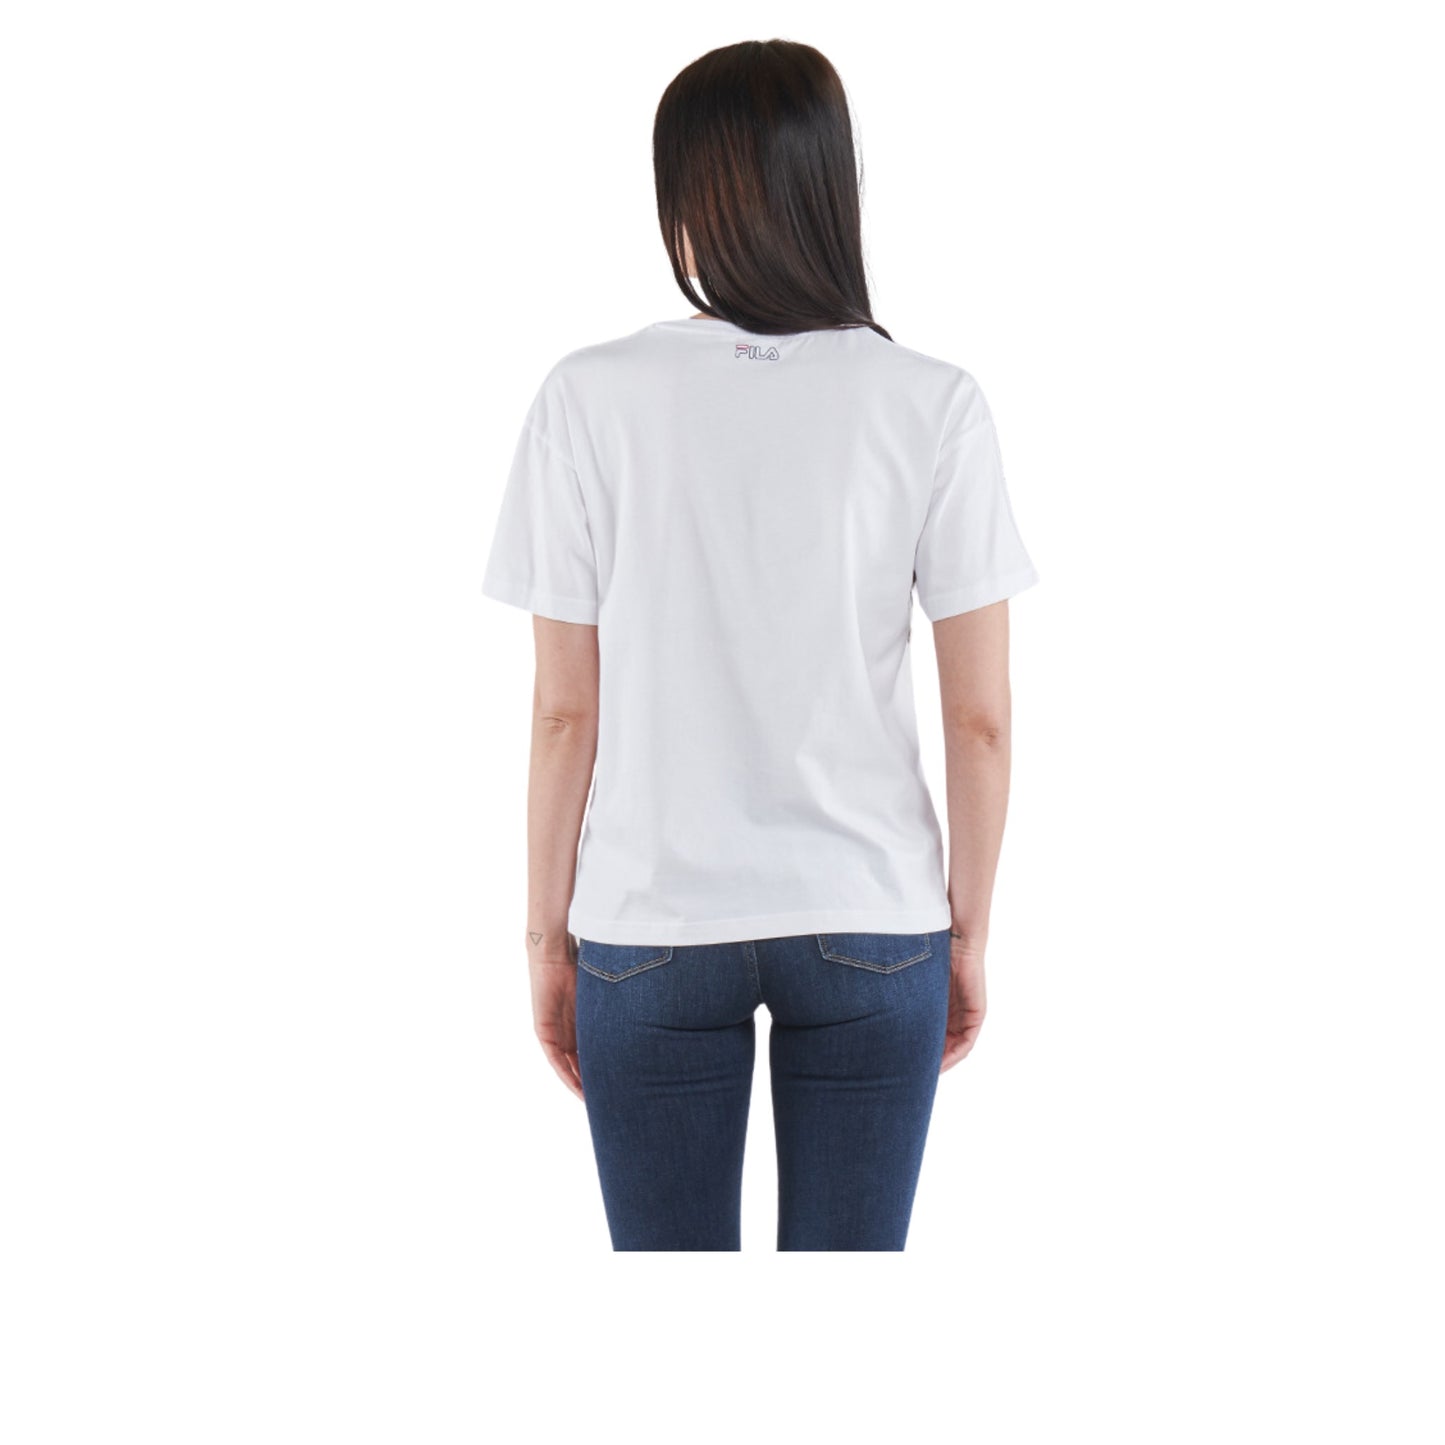 fila camiseta mujer m67 blanco